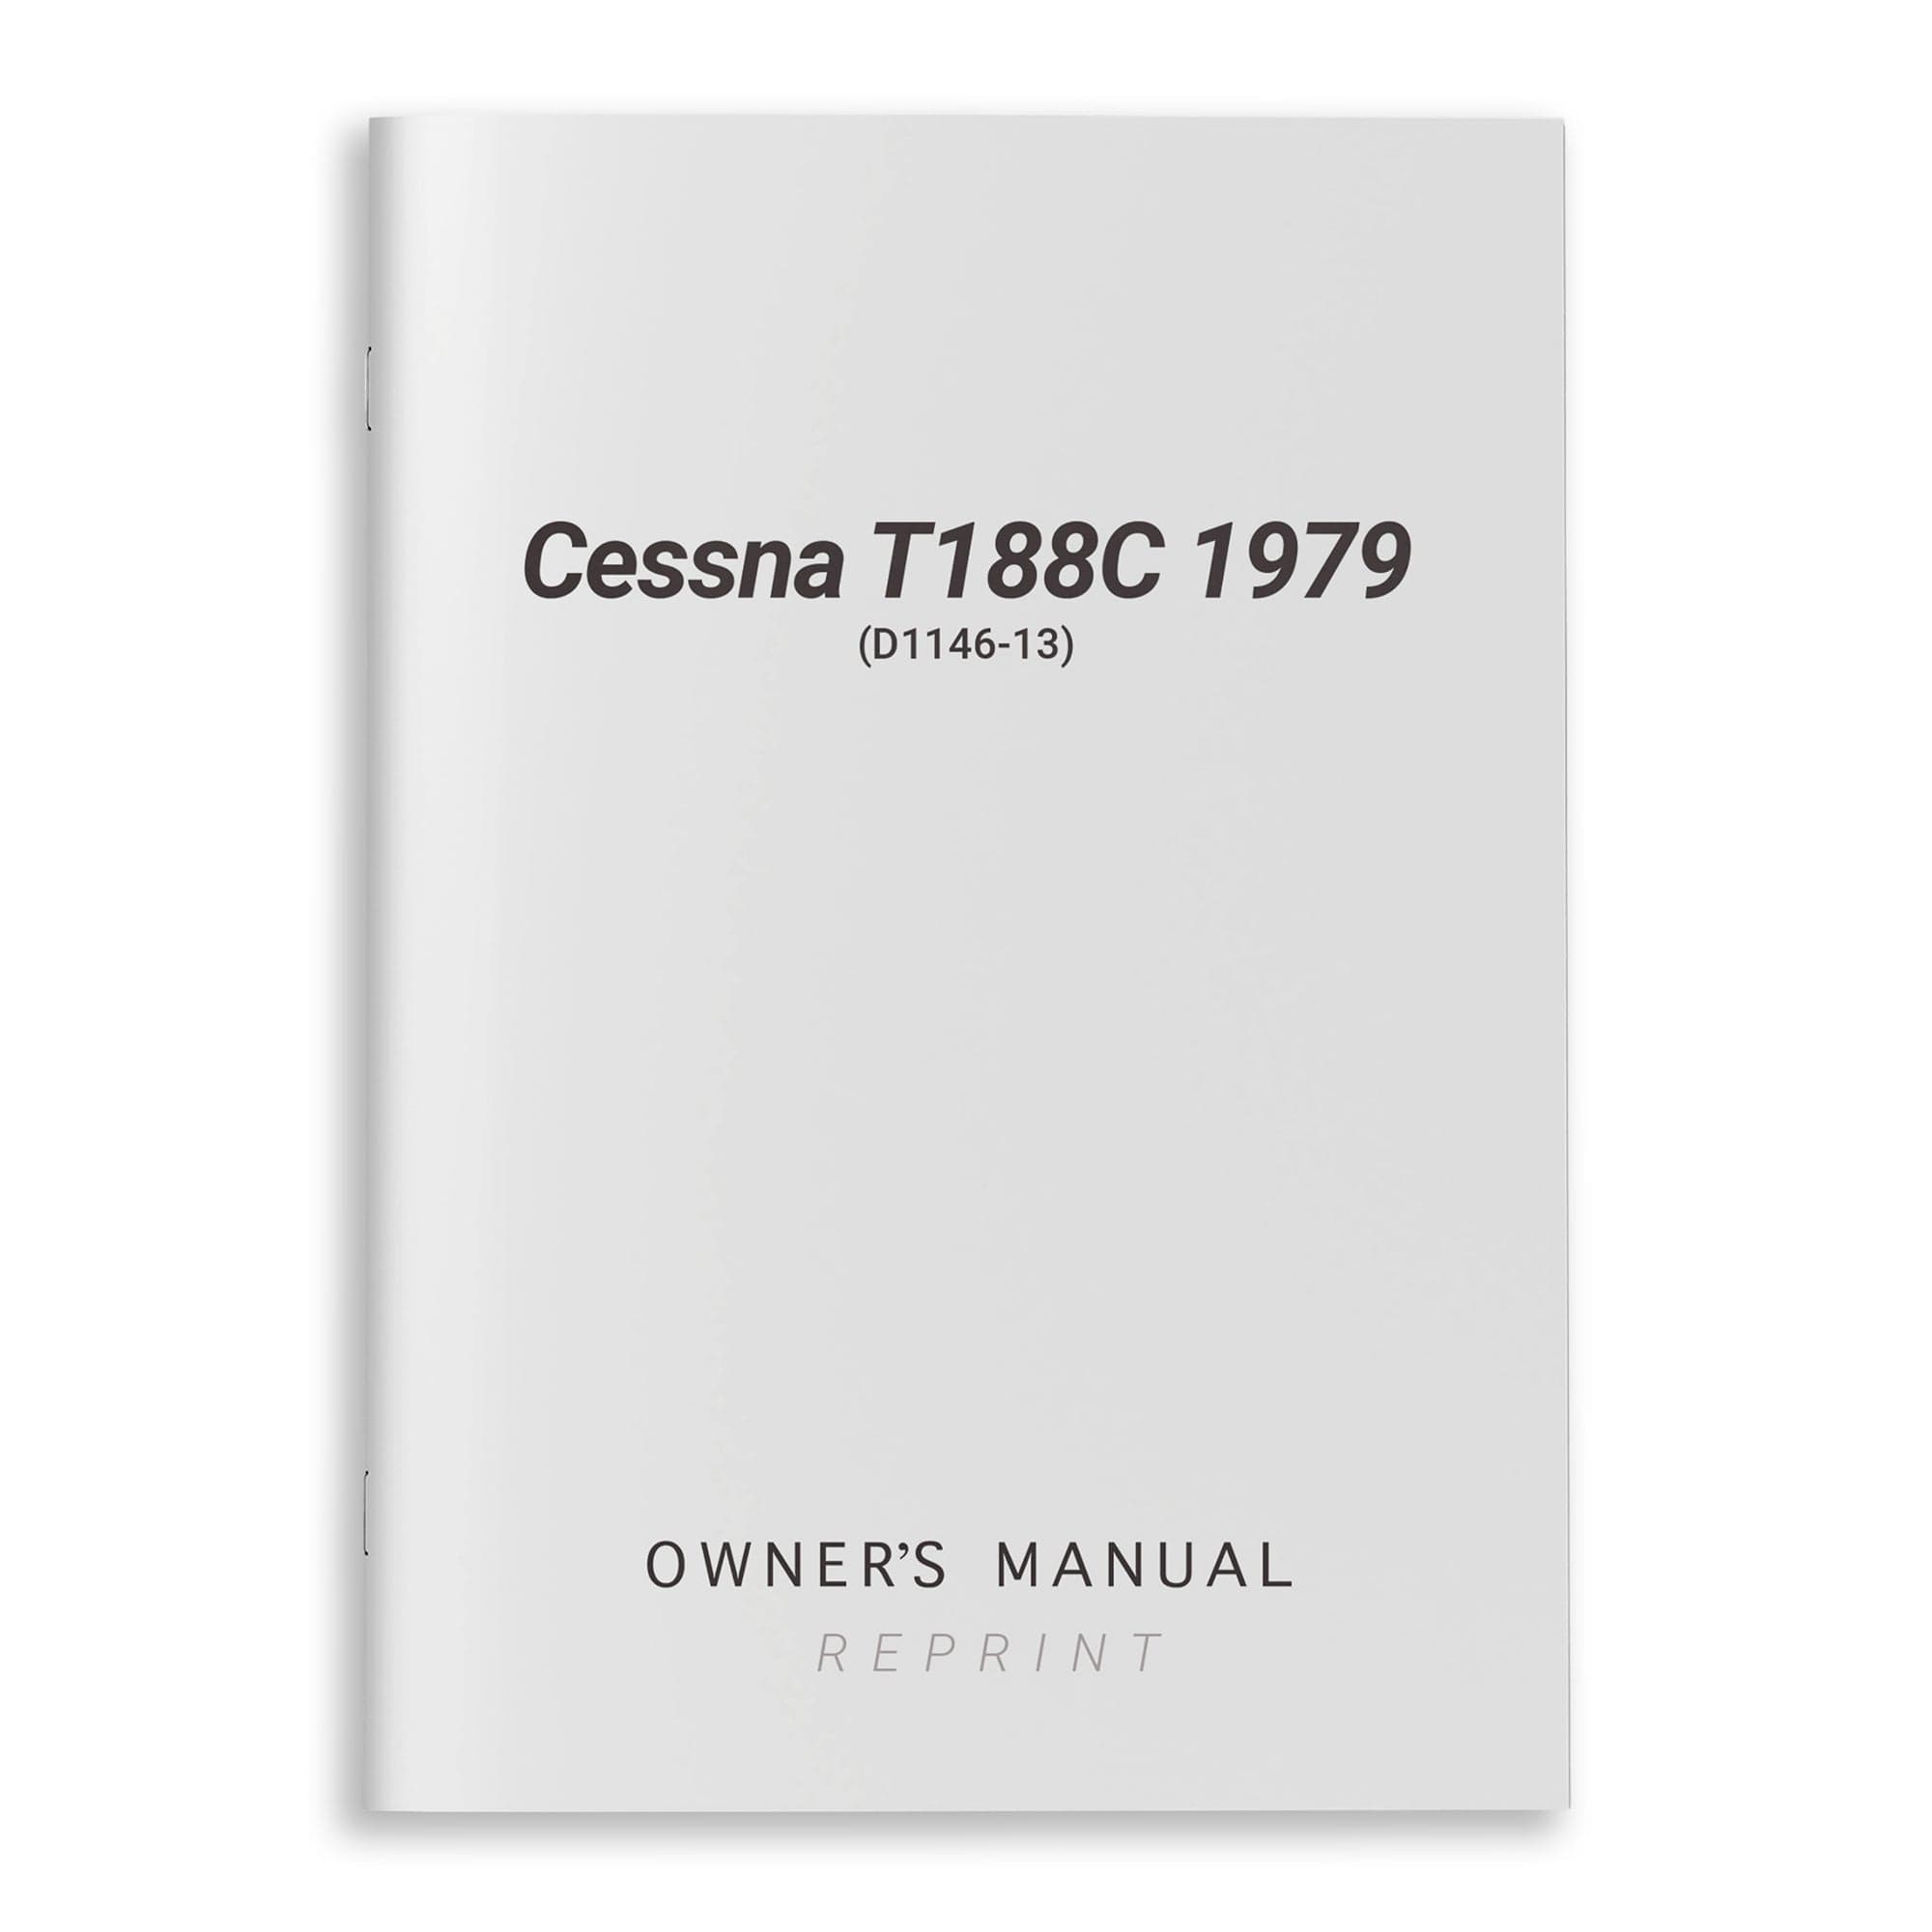 Cessna T188C 1979 Owner's Manual (D1146-13)